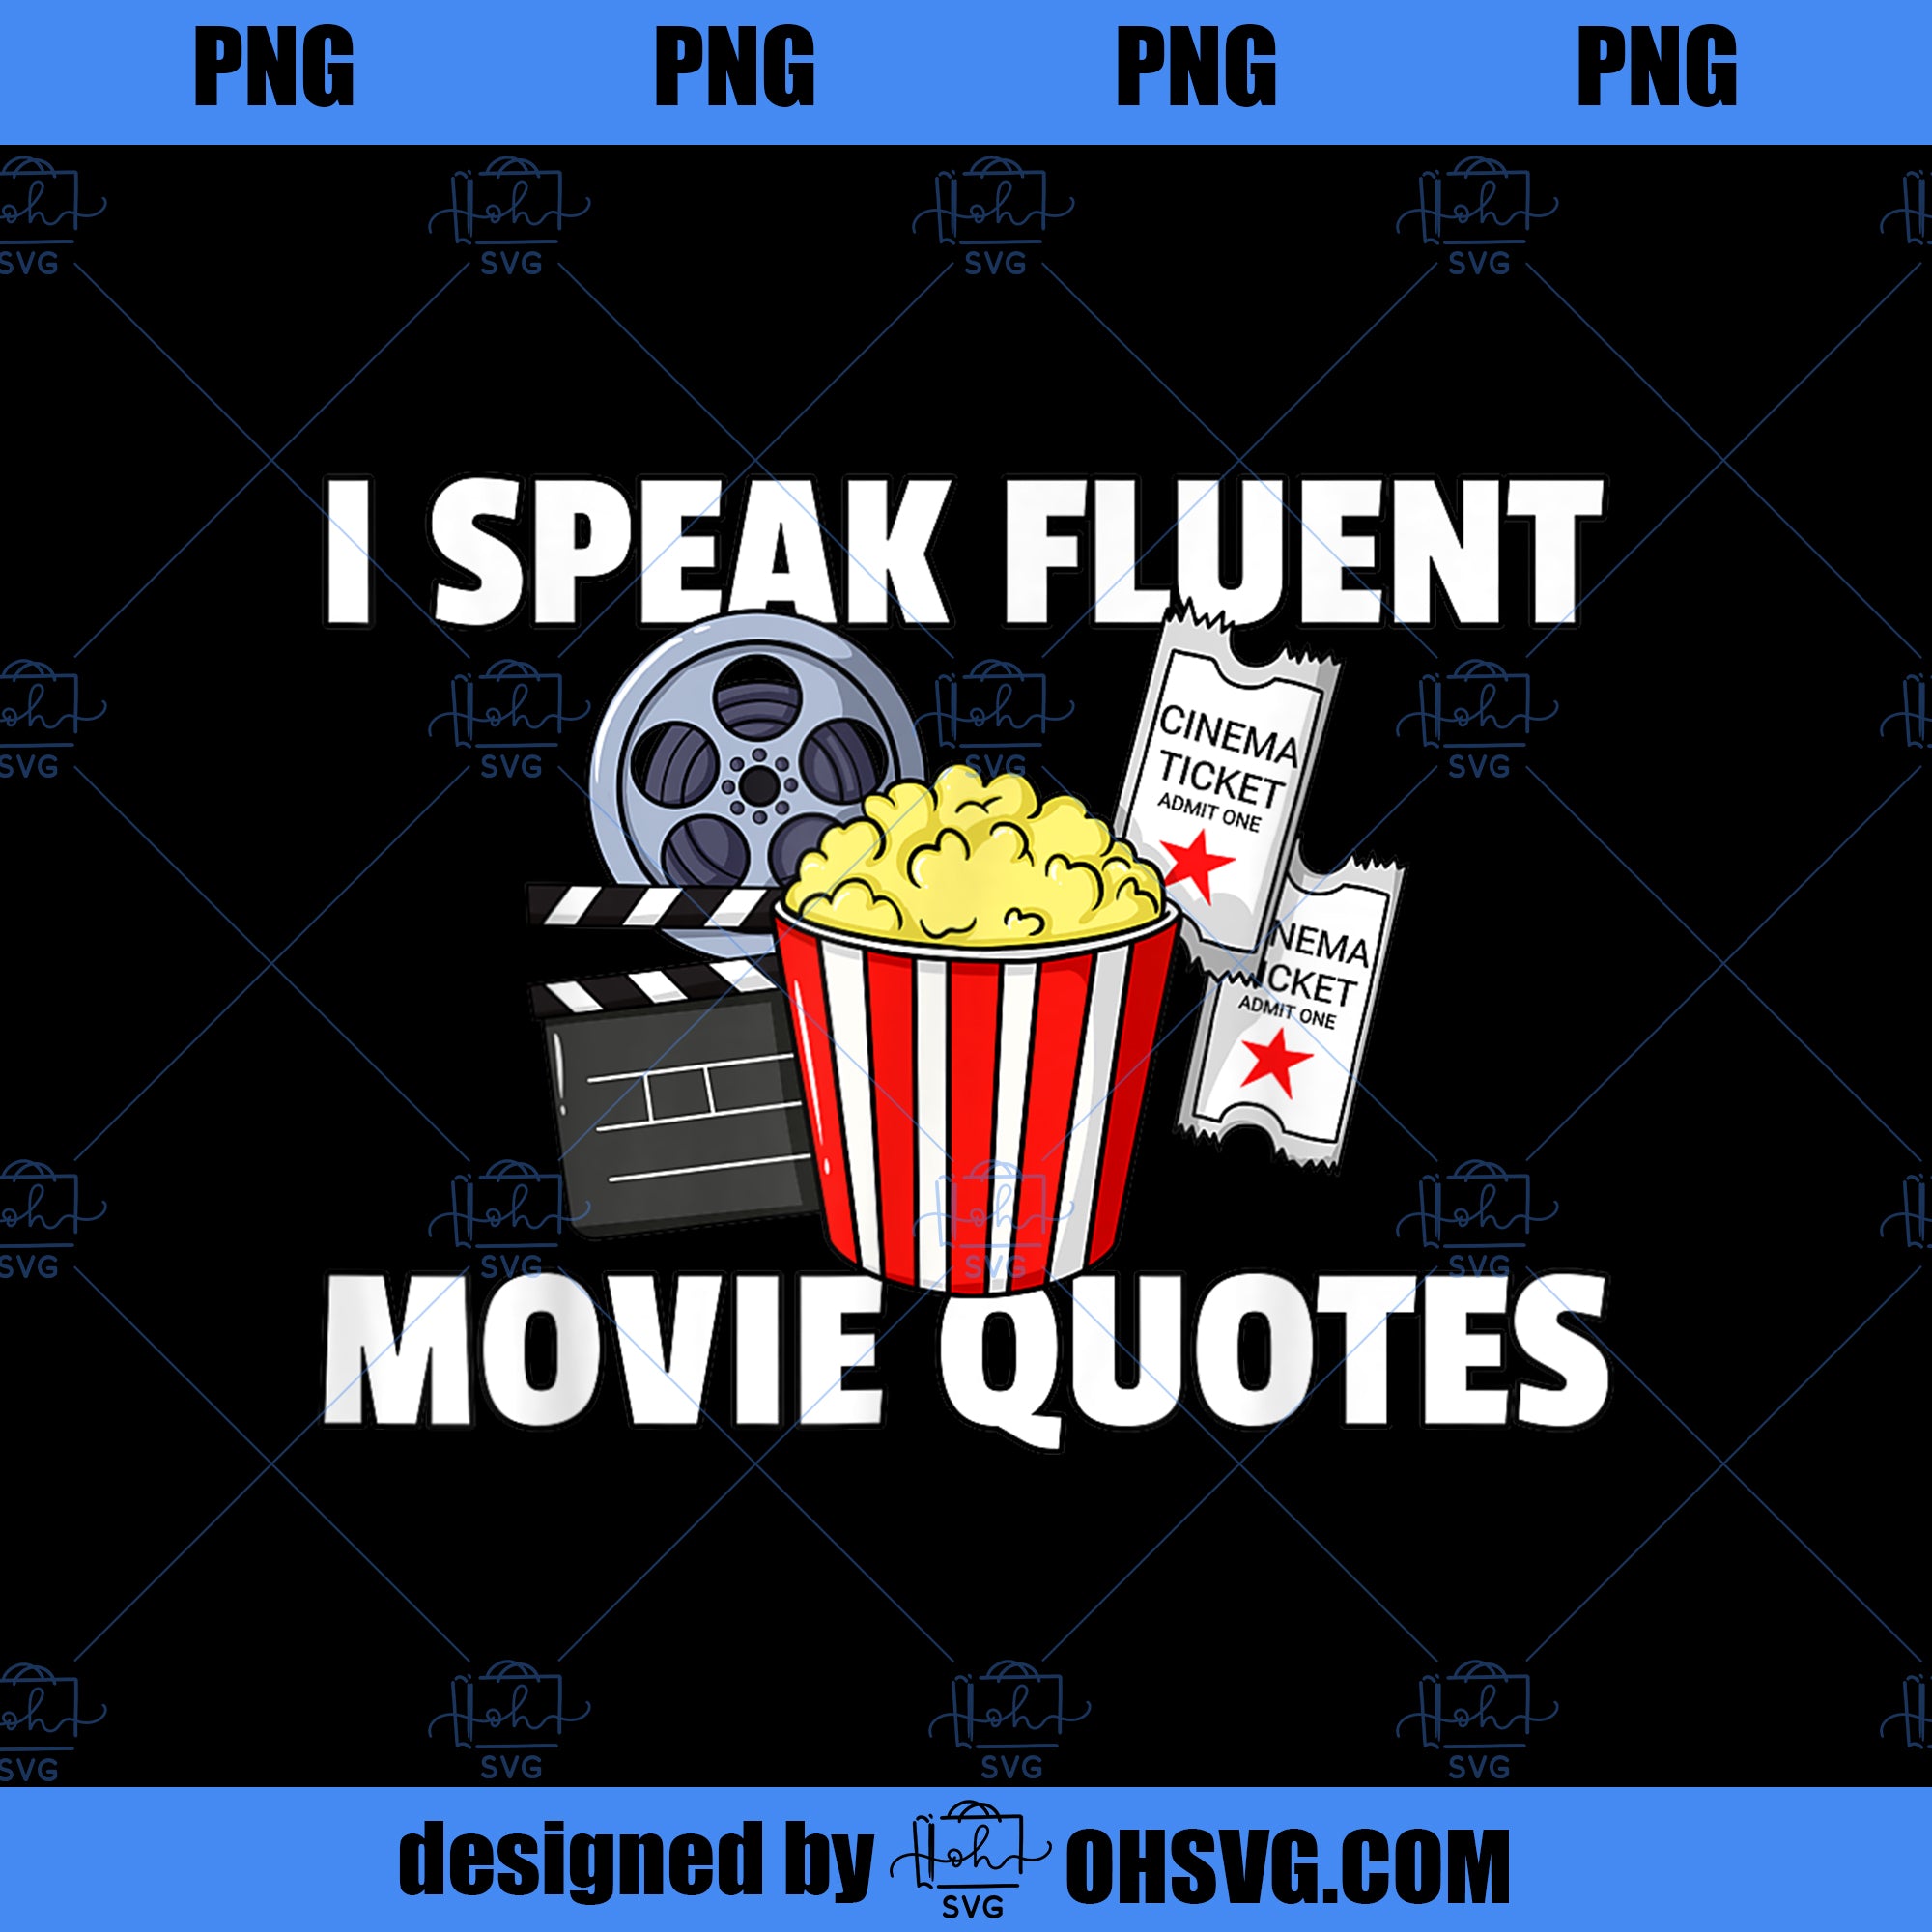 I Speak Fluent Movie Quotes Cinema Gift Watching Night PNG Download, Movies PNG, Fluent Movie PNG